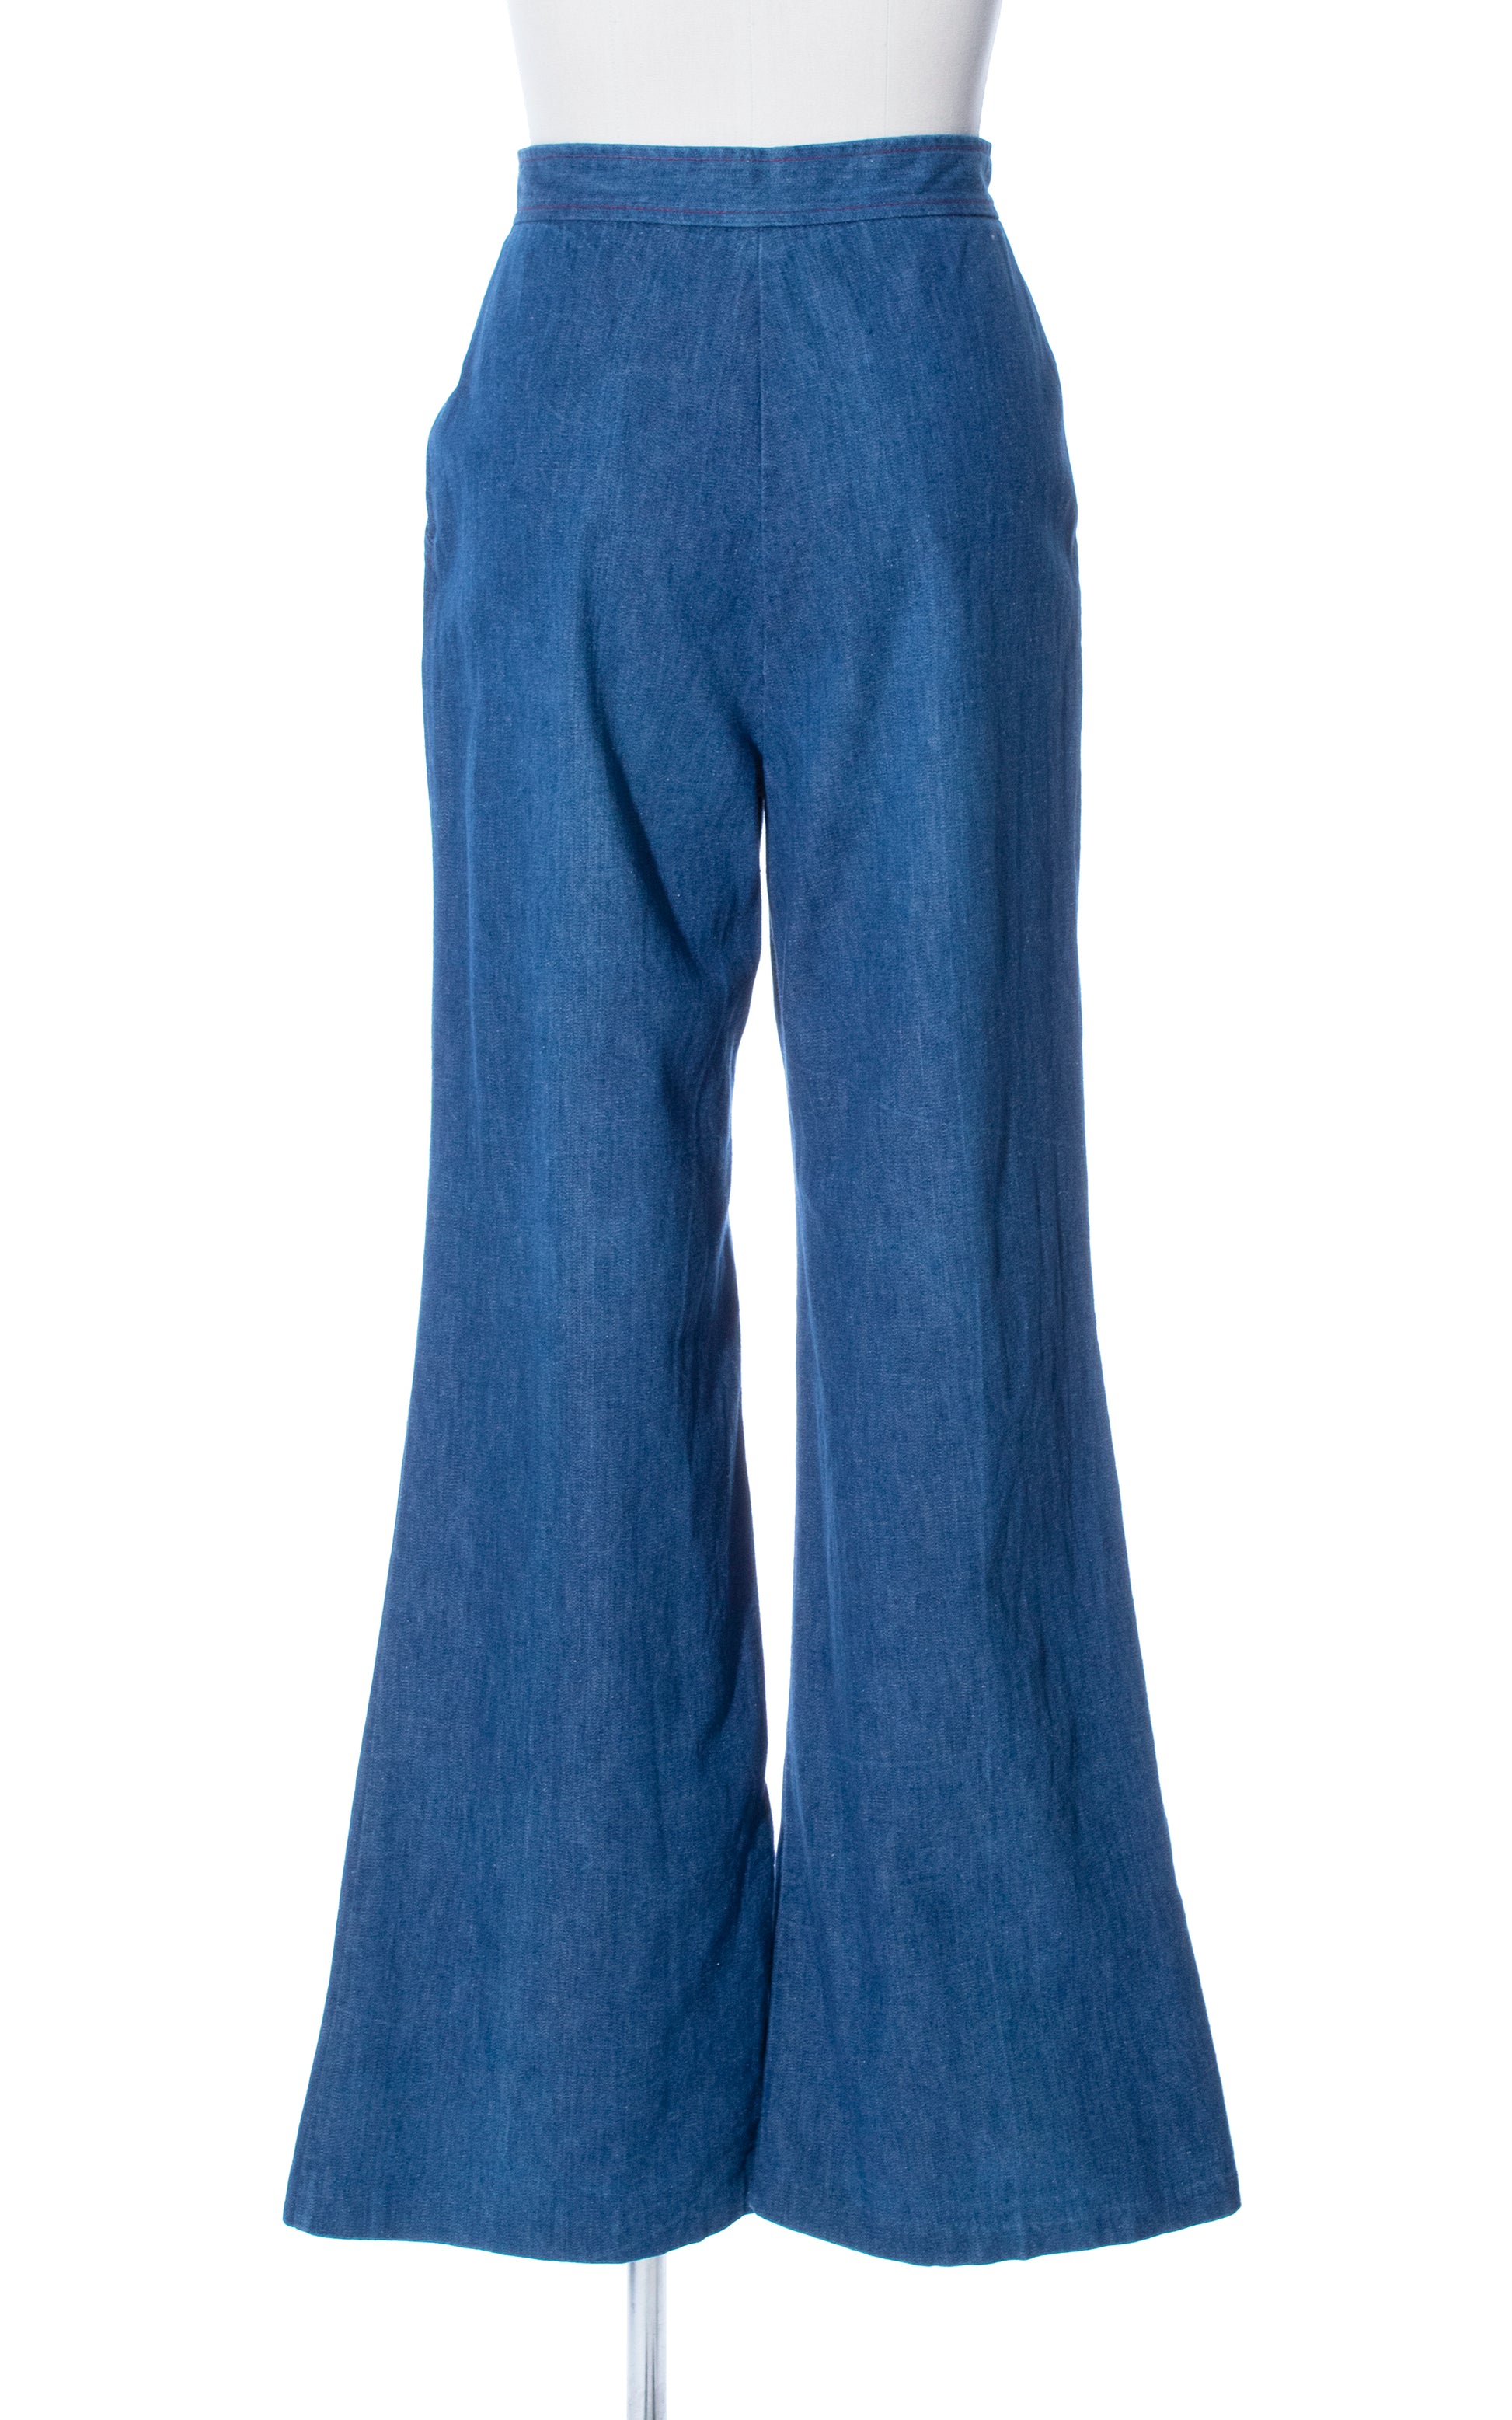 Vintage 70s 1970s Denim High Waisted Medium Blue Wash Flared Bell Bottom Jeans Birthday Life Vintage